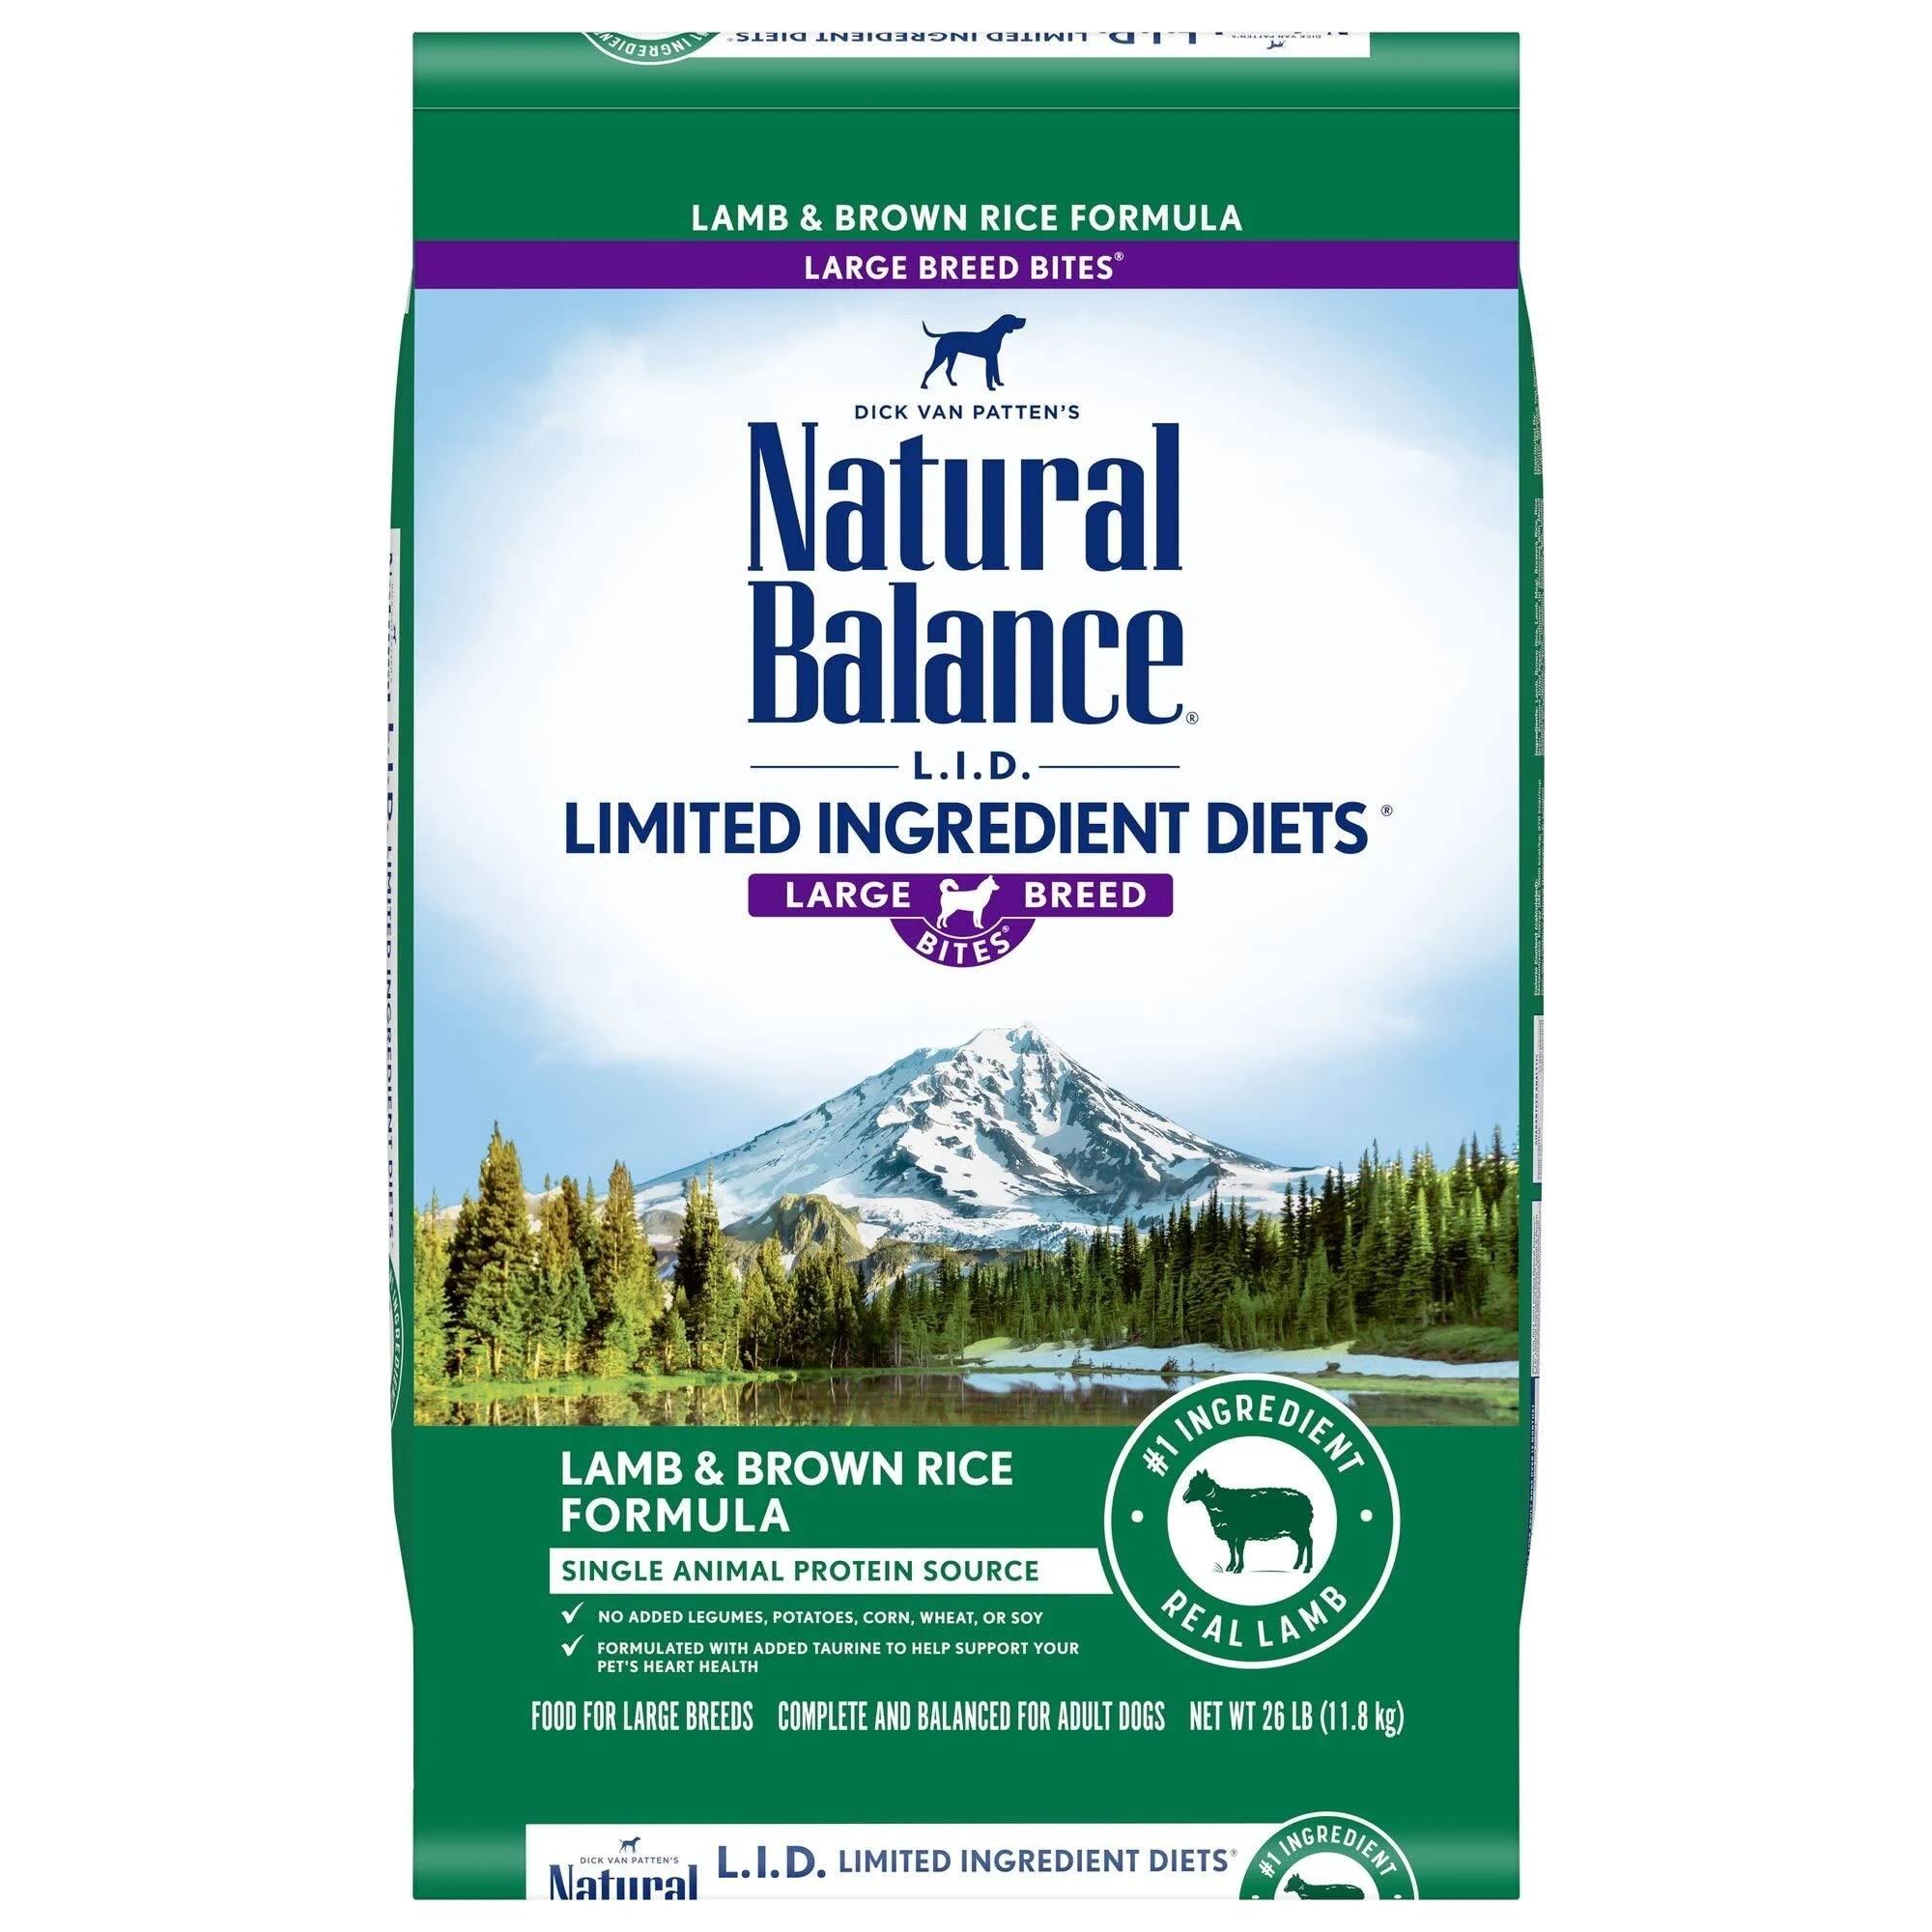 Natural Balance Limited Ingredient Diets Large Breed Bites Dog Food, Lamb & Brown Rice Formula - 26 lb